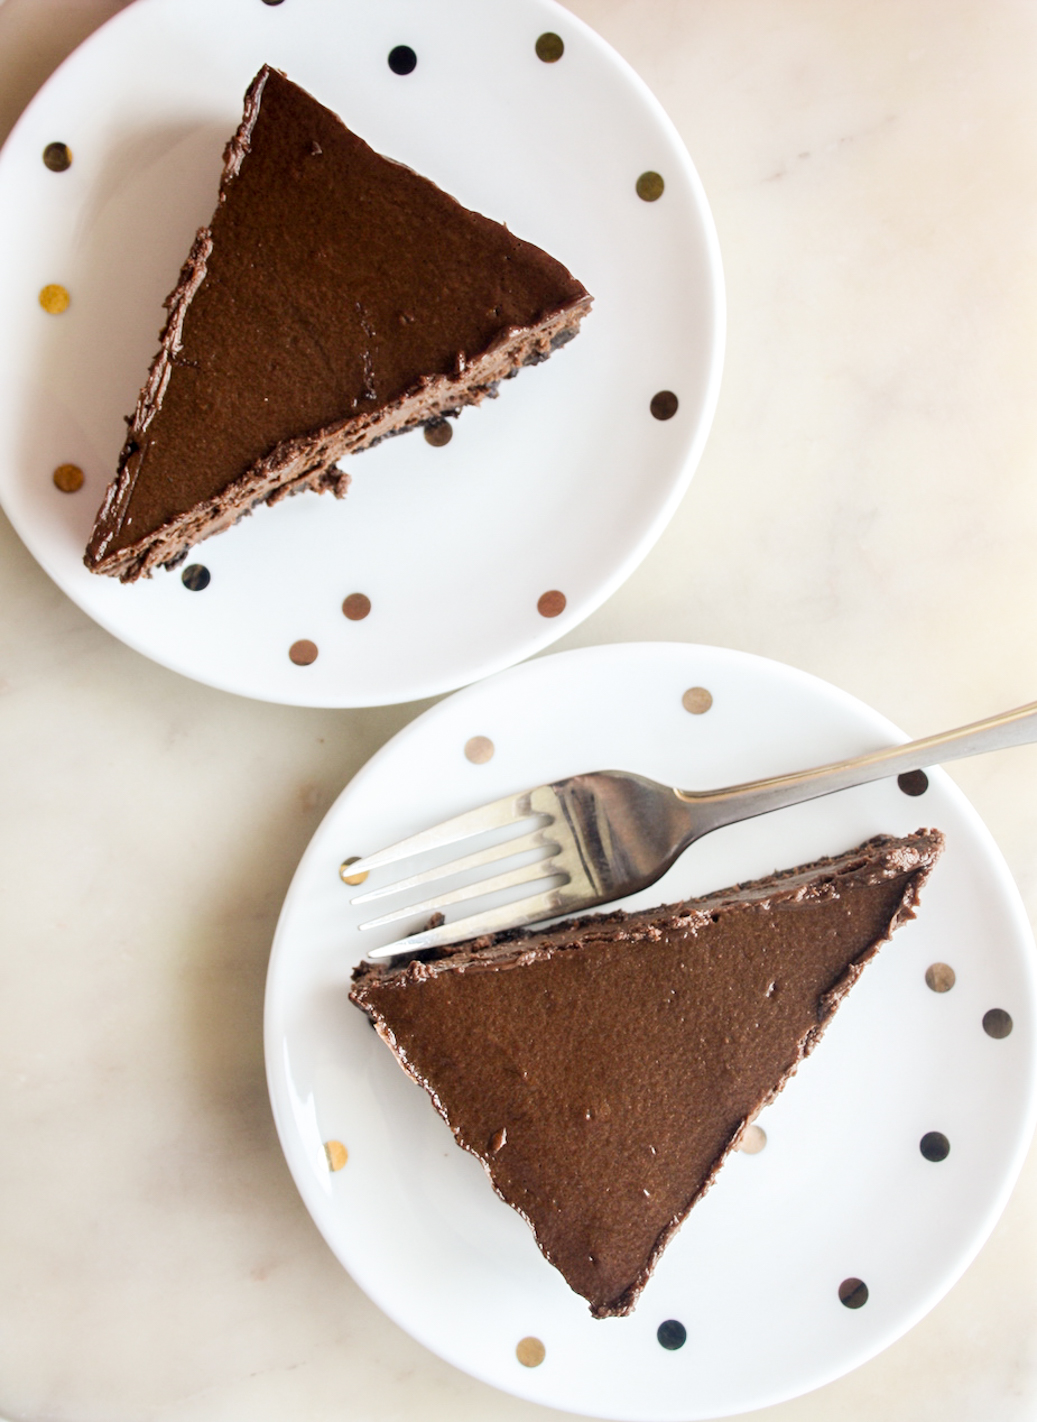 Creamy, baked small-batch chocolate cheesecake on an Oreo crust